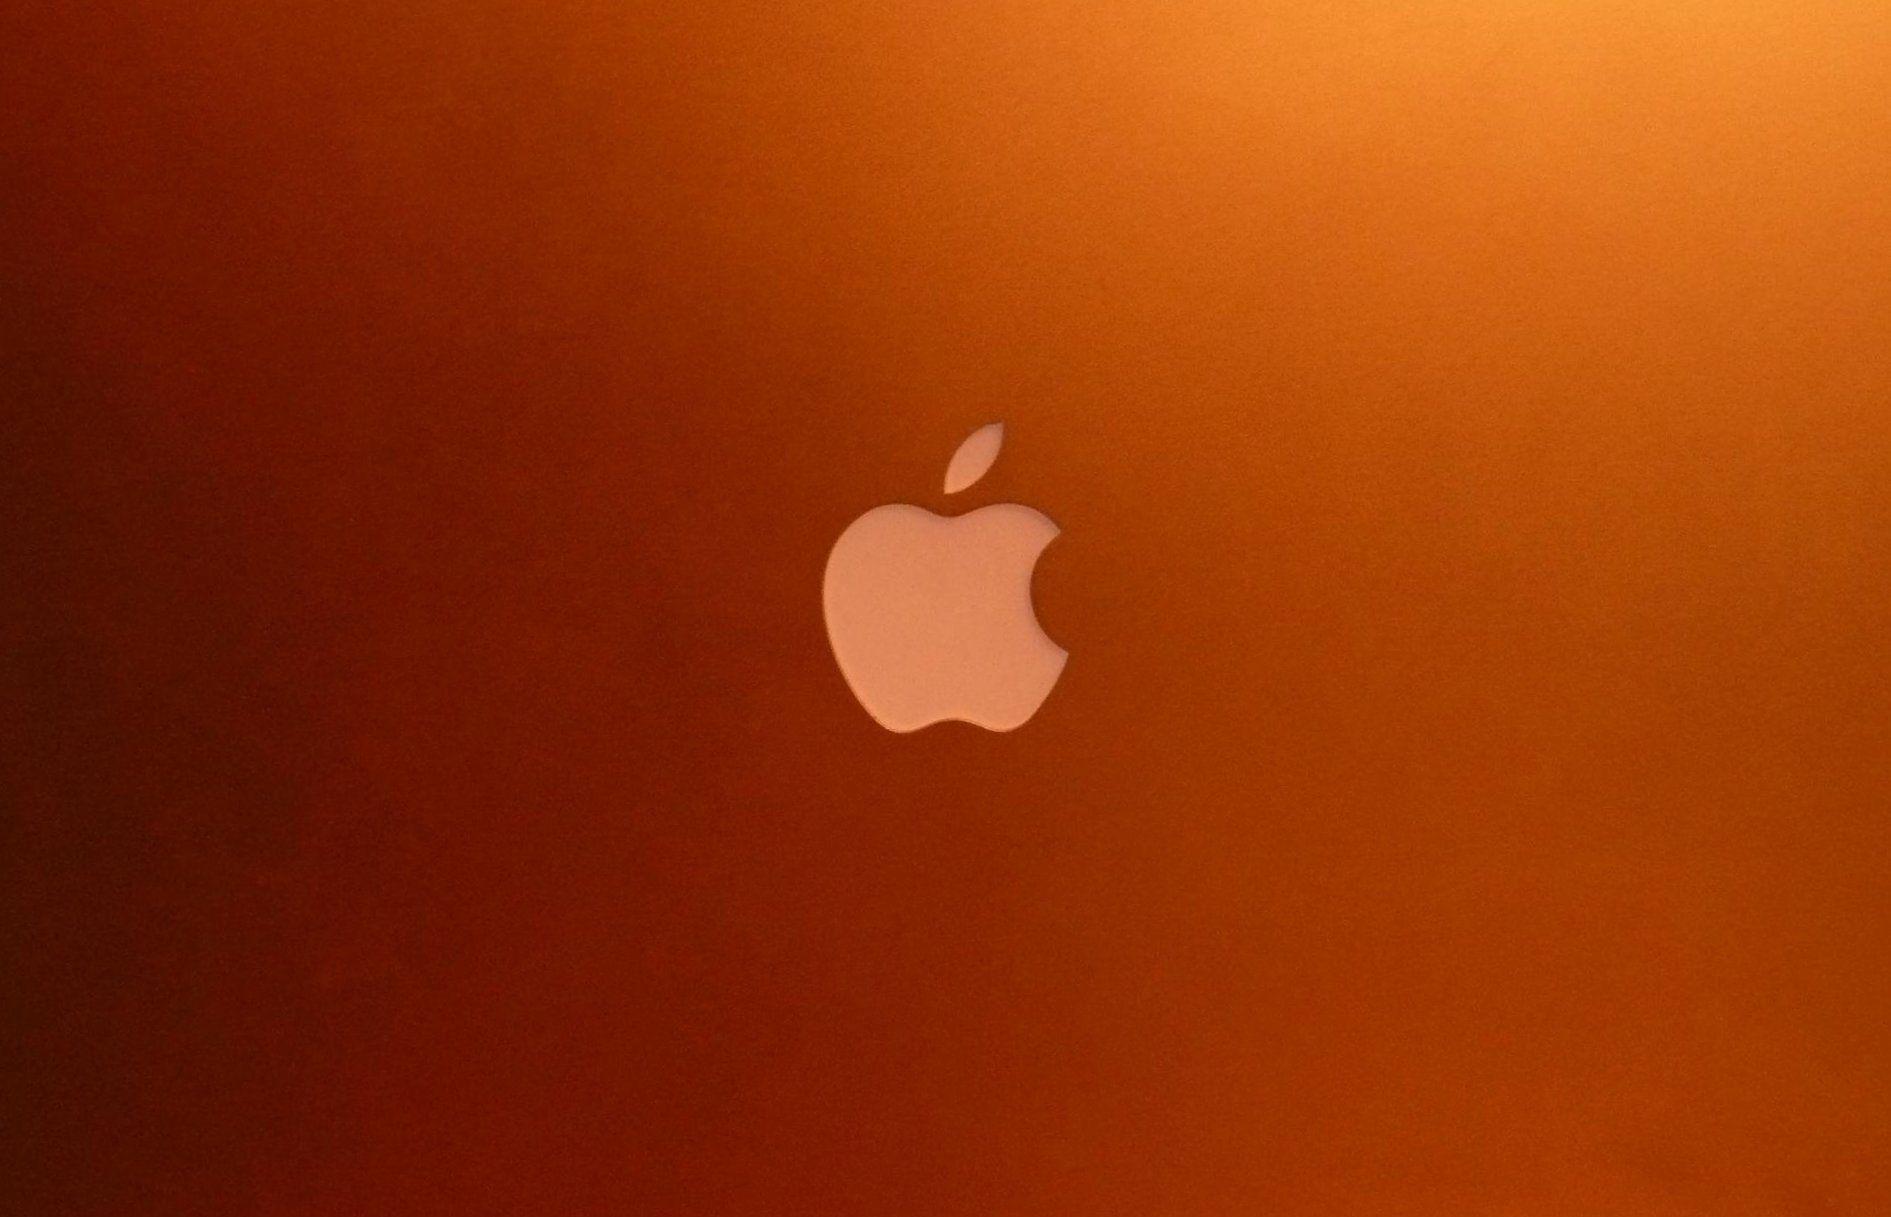 Download Apple Orange And Red Wallpaper 1891x1217. HD Wallpaper